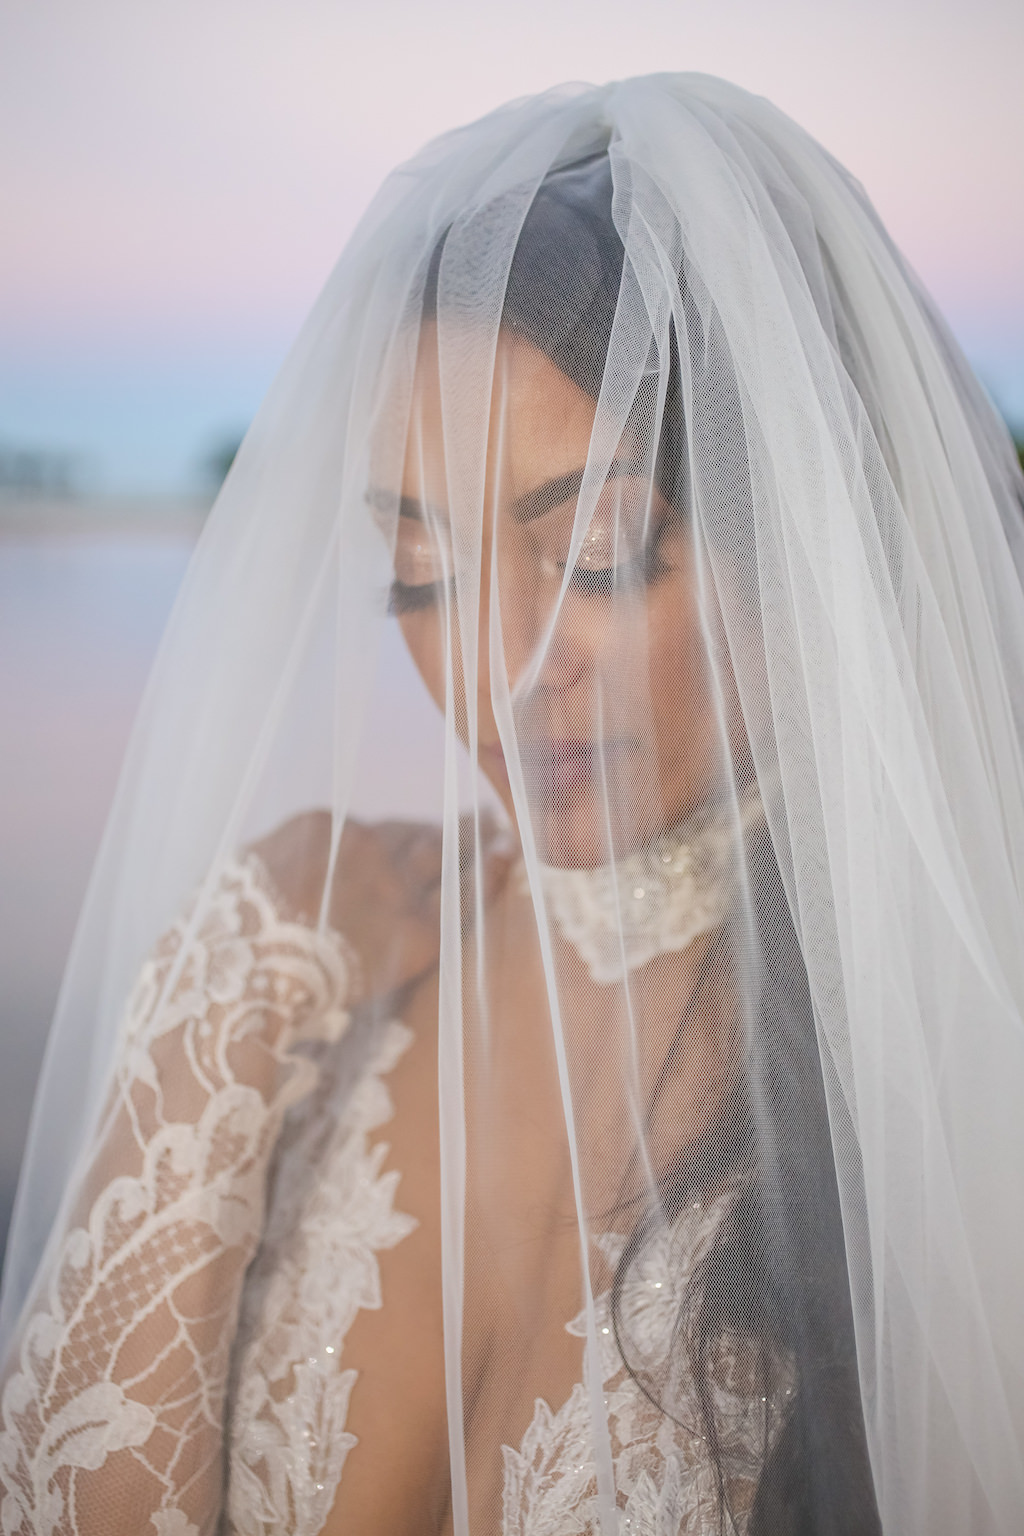 Creative Bridal Portrait Under Veil in Lace and Sheer Long Sleeve High Neck Wedding Dress | St. Petersburg Photographer Lifelong Photography Studios